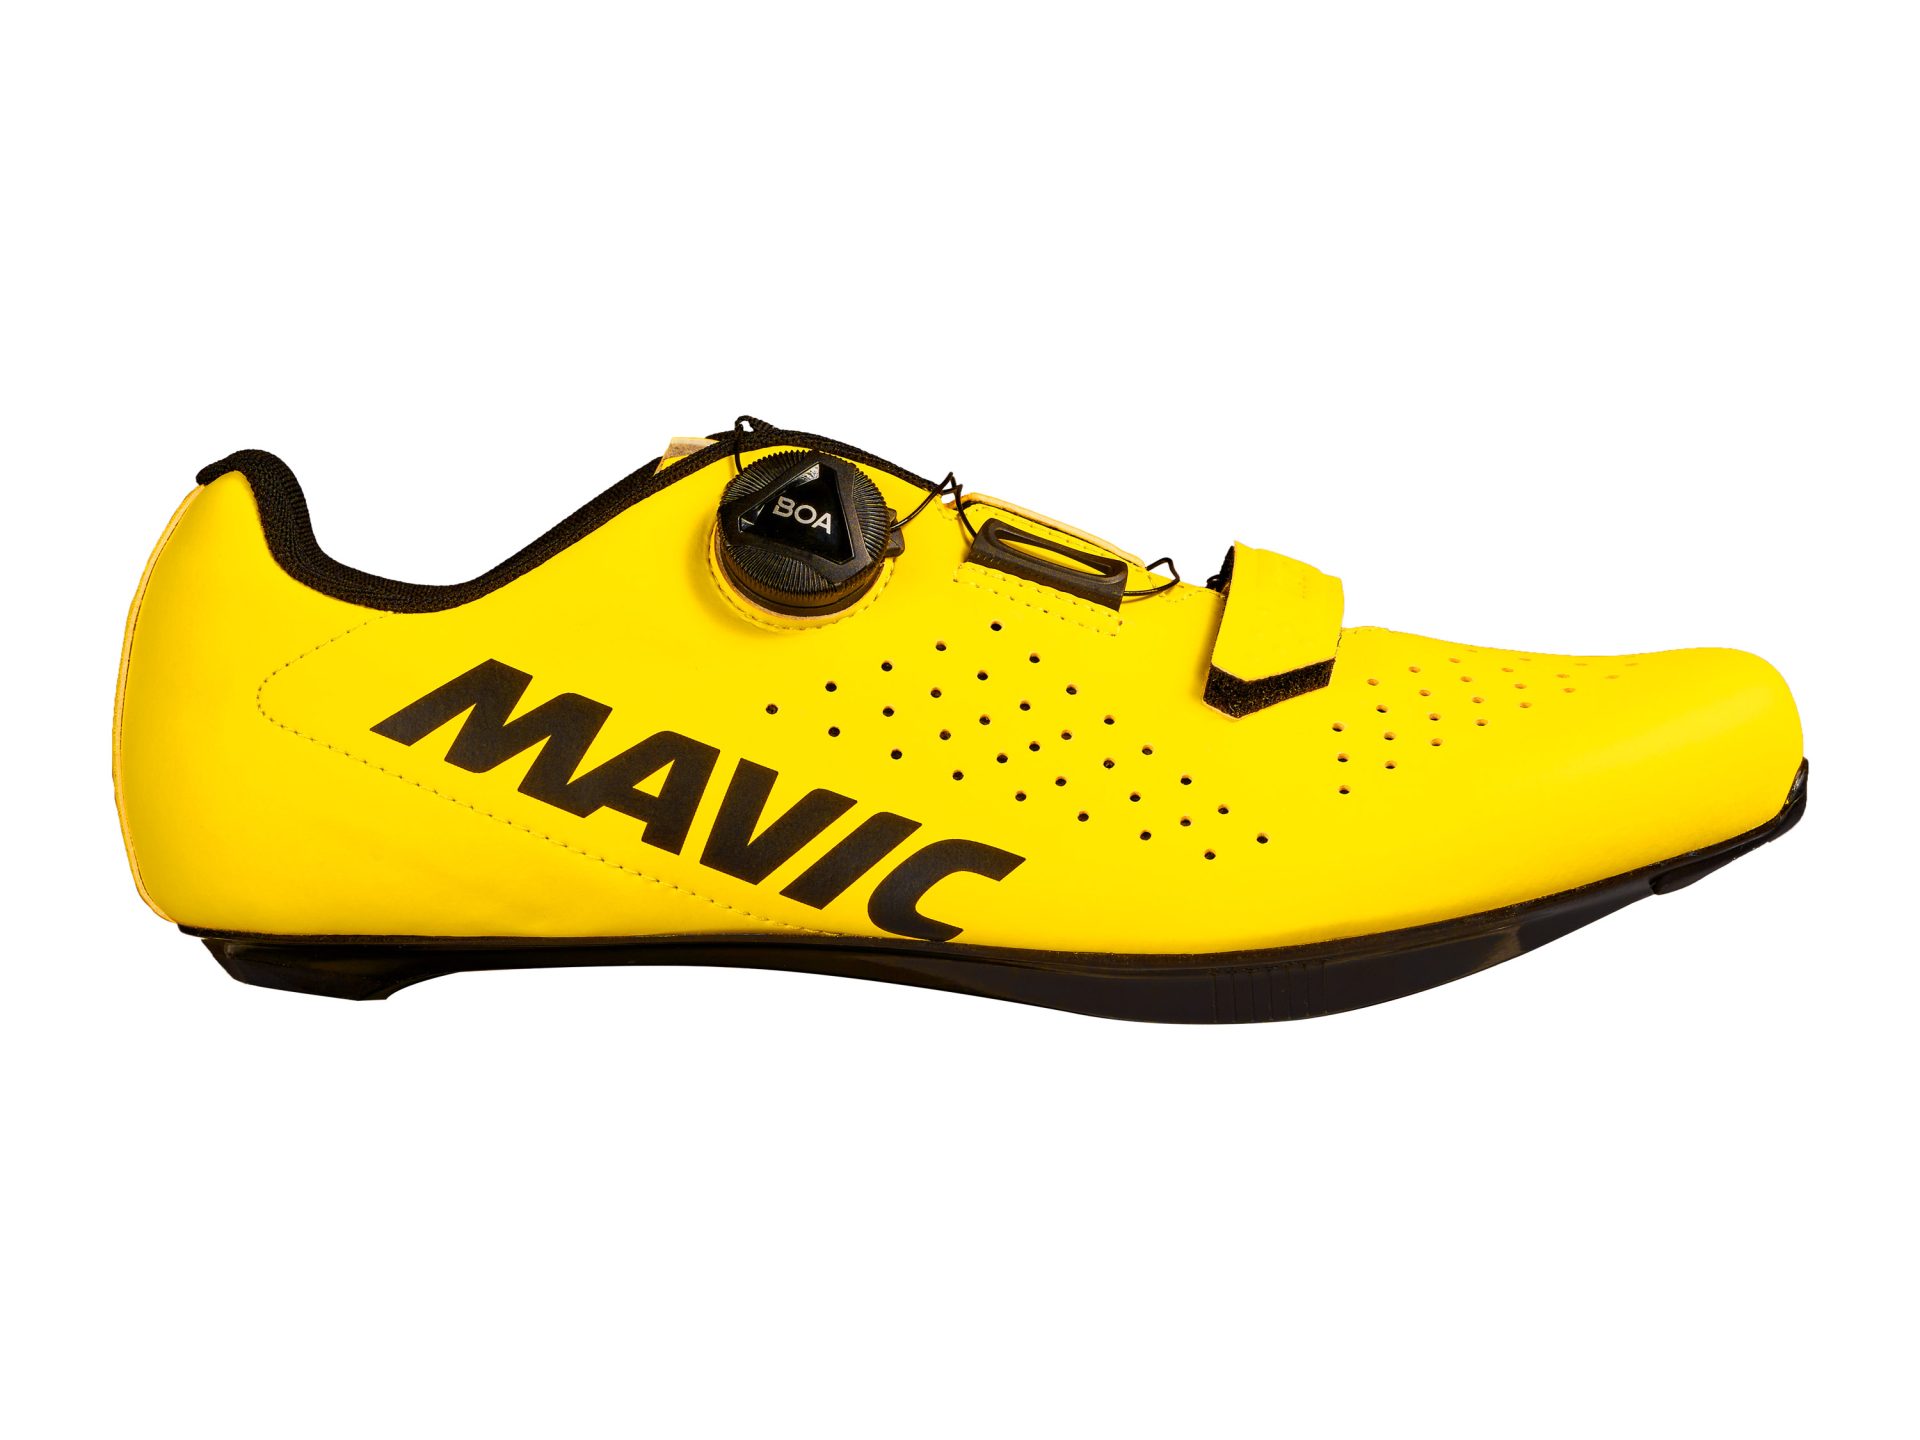 Yellow Mavic road cycling shoes